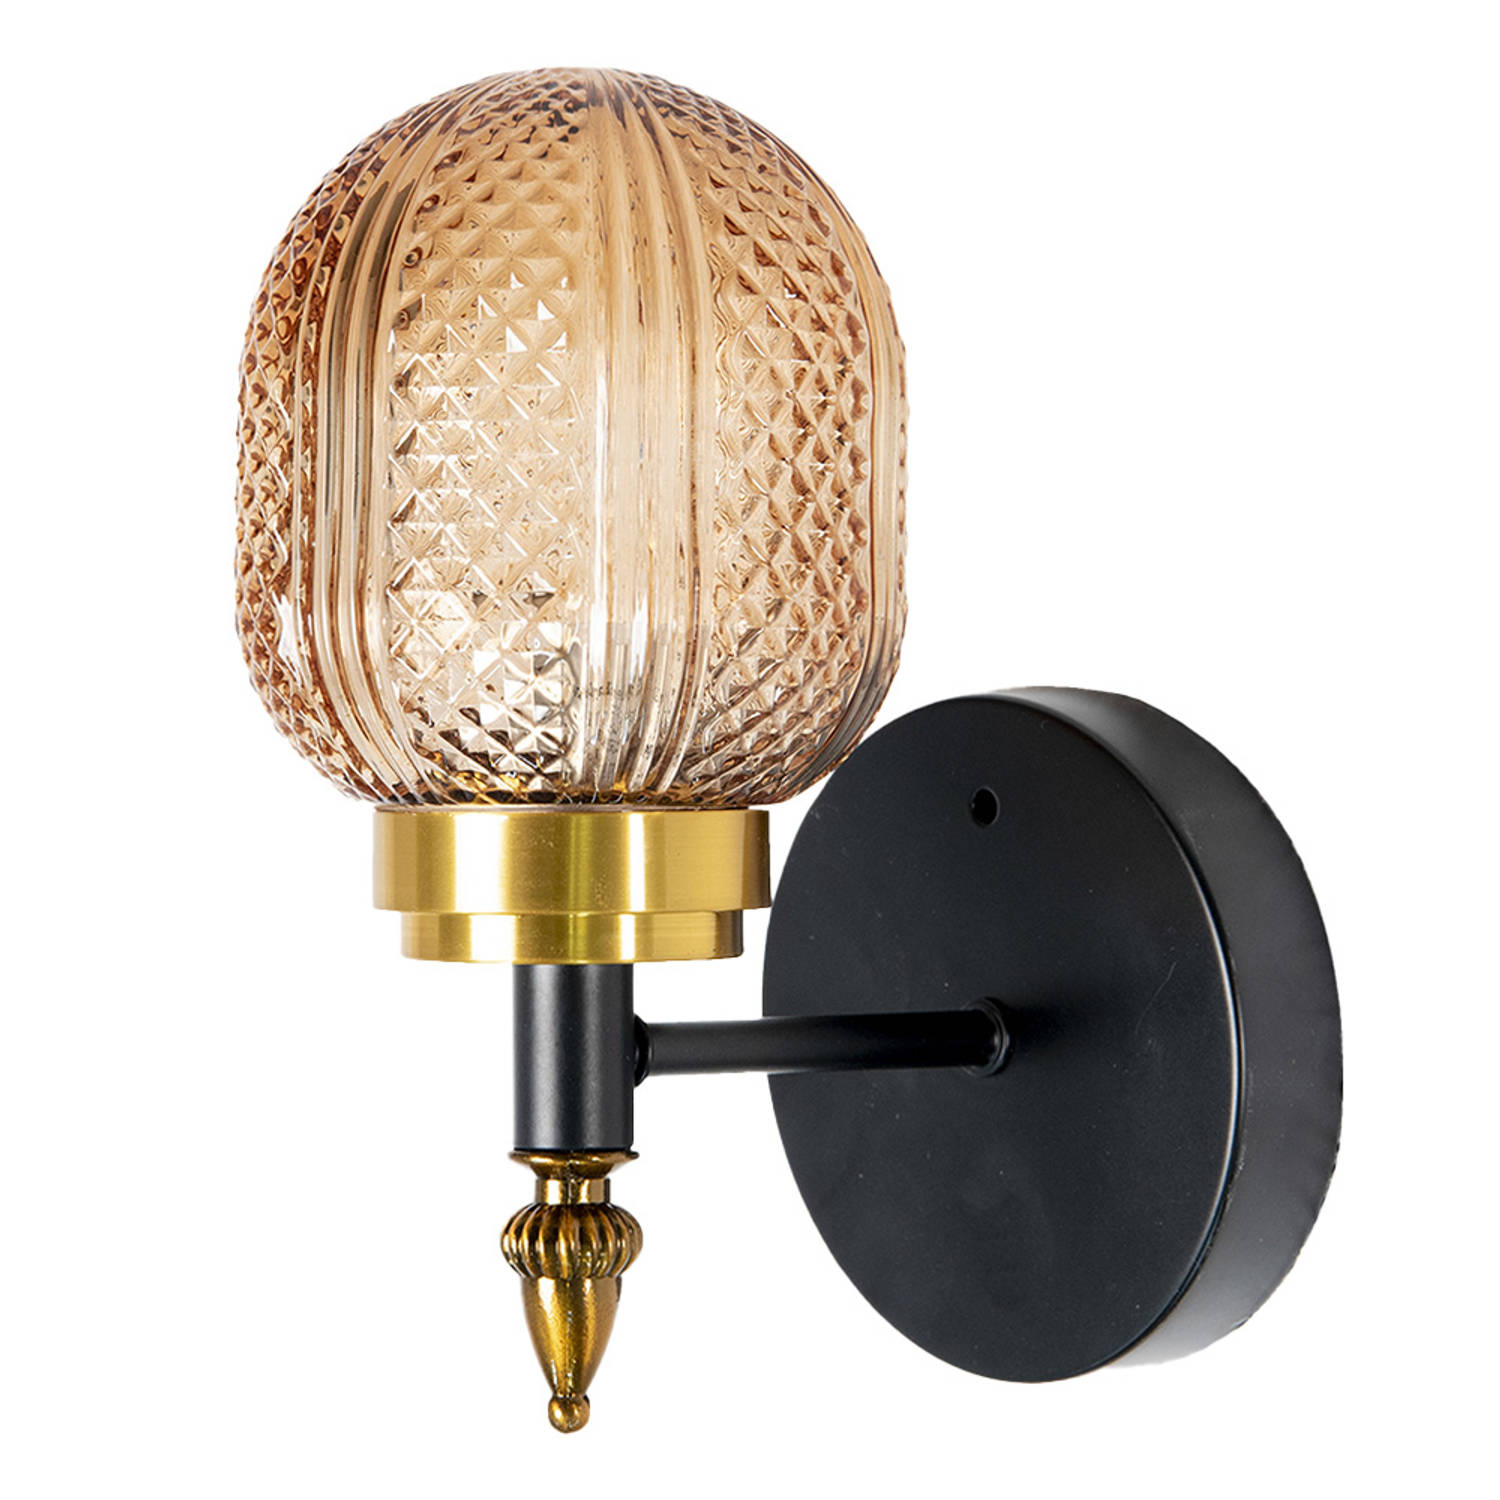 HAES DECO - Wandlamp - Modern Chic - Stijlvolle Lamp, formaat 13x15x23 cm - Goudkleurig / Zwart Metaal en Glas - Muurlamp, Sfeerlamp